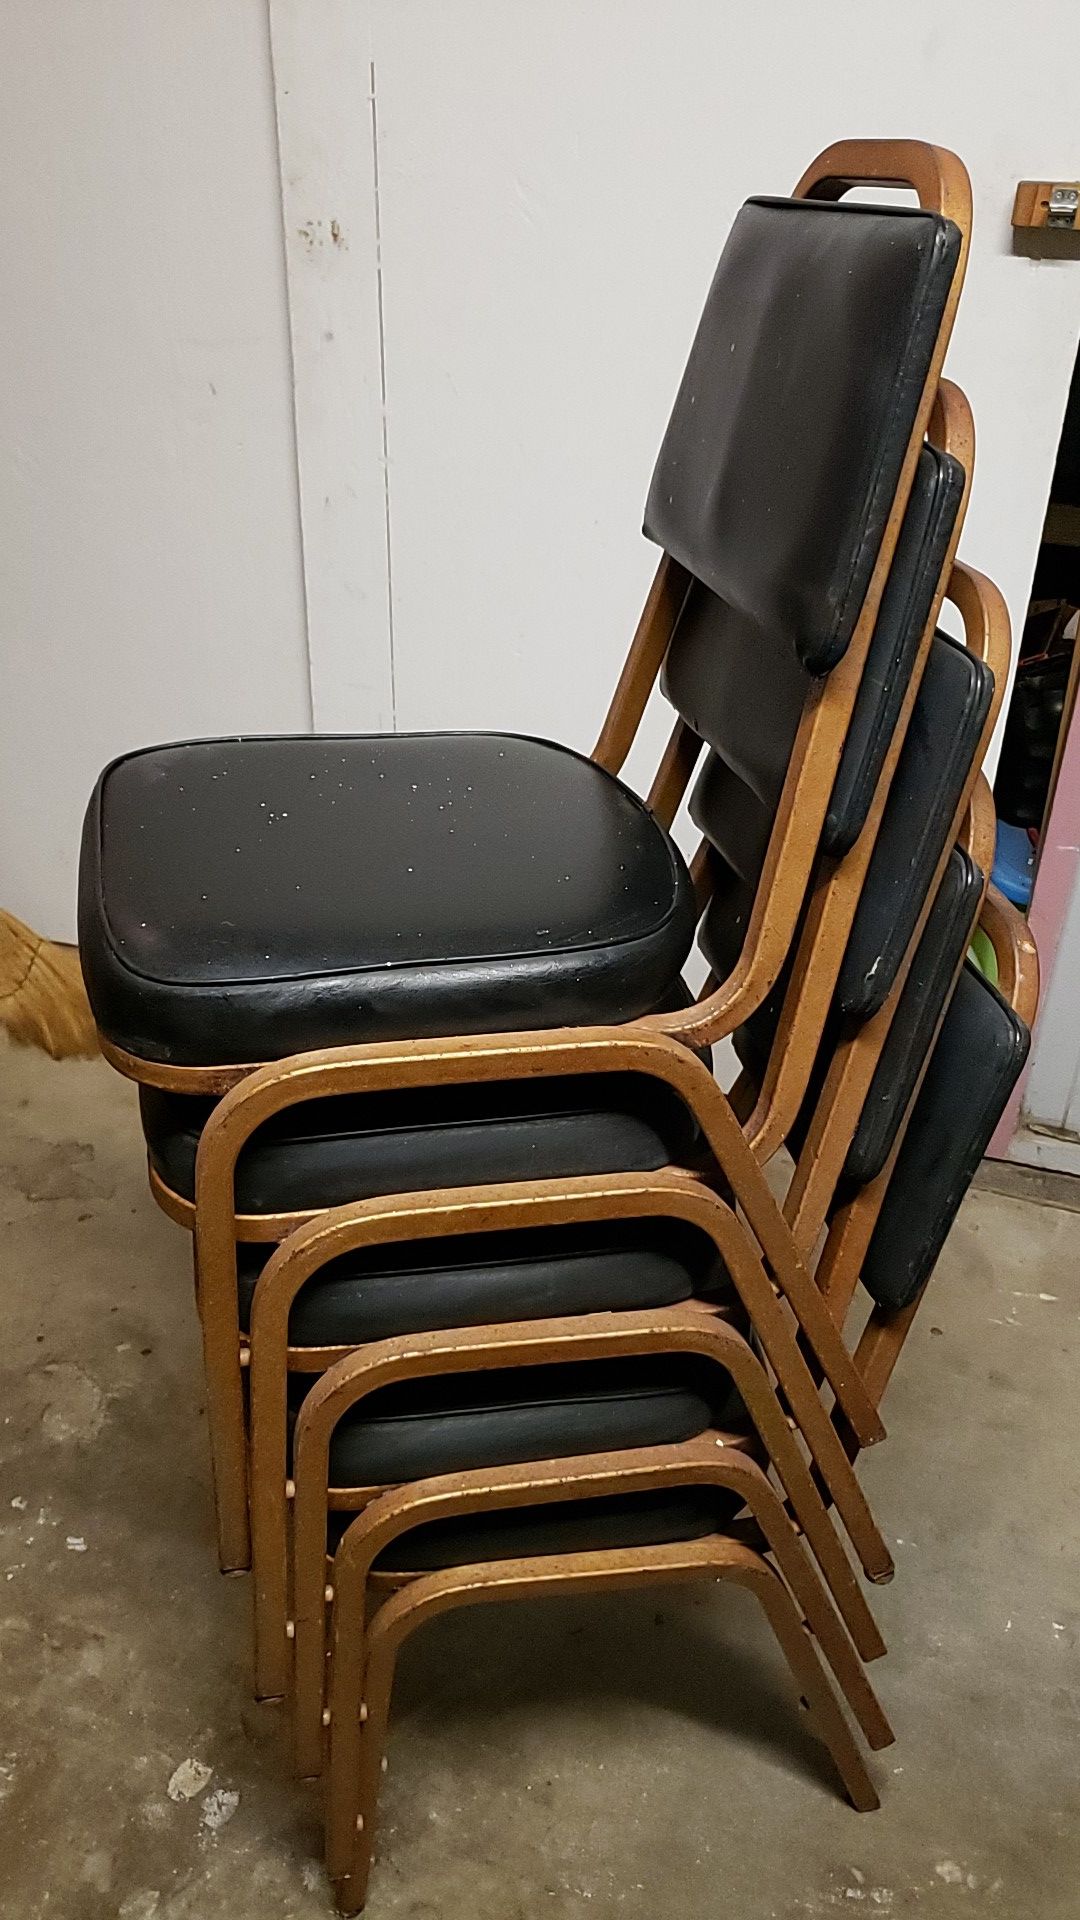 X5 Chairs